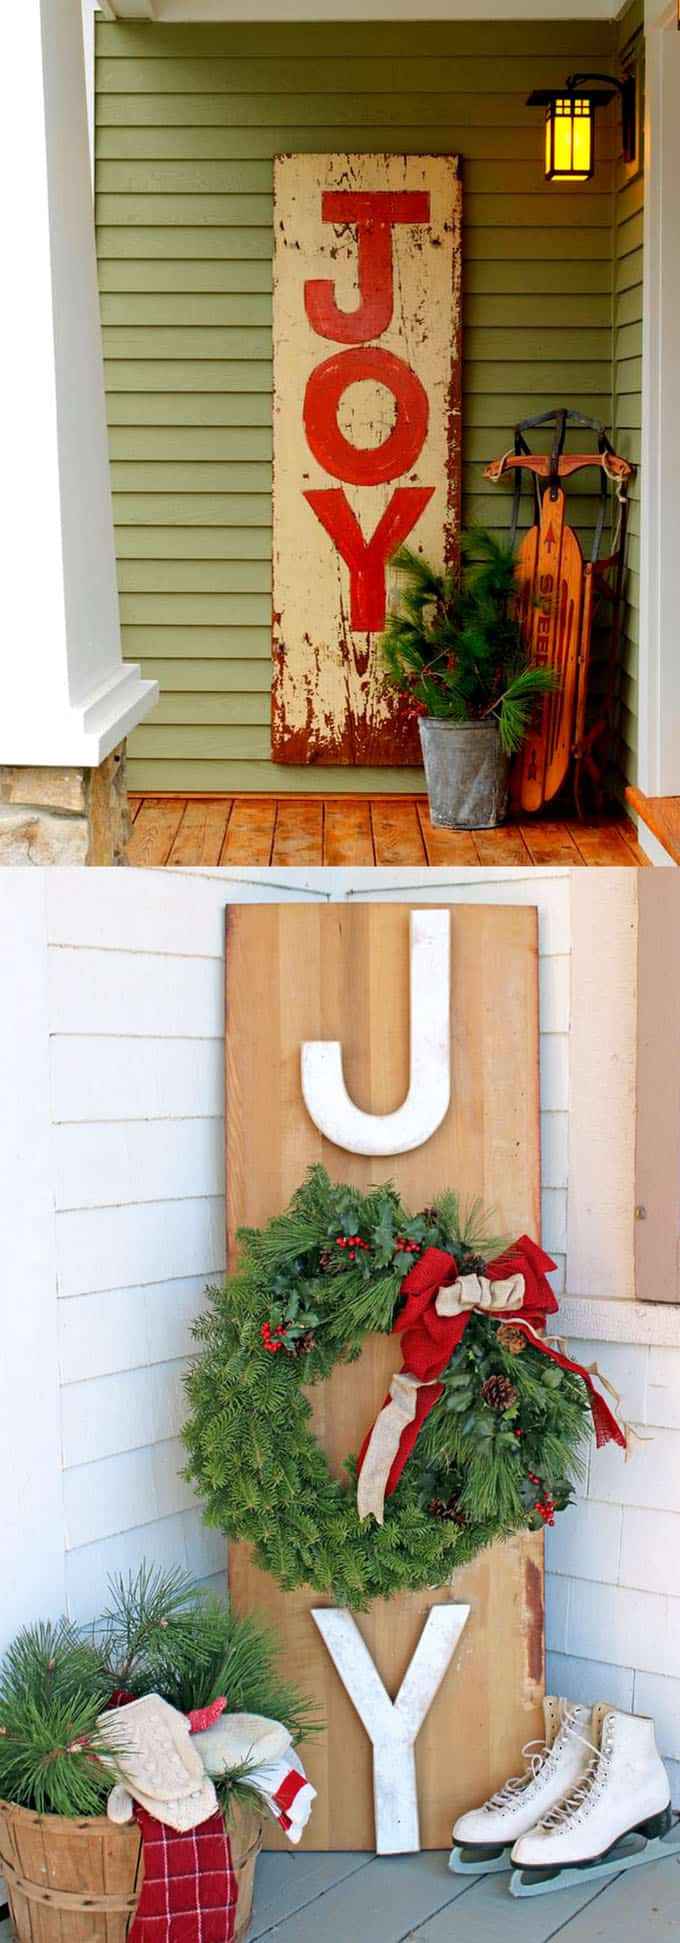 DIY Christmas Yard Decor
 Gorgeous Outdoor Christmas Decorations 32 Best Ideas